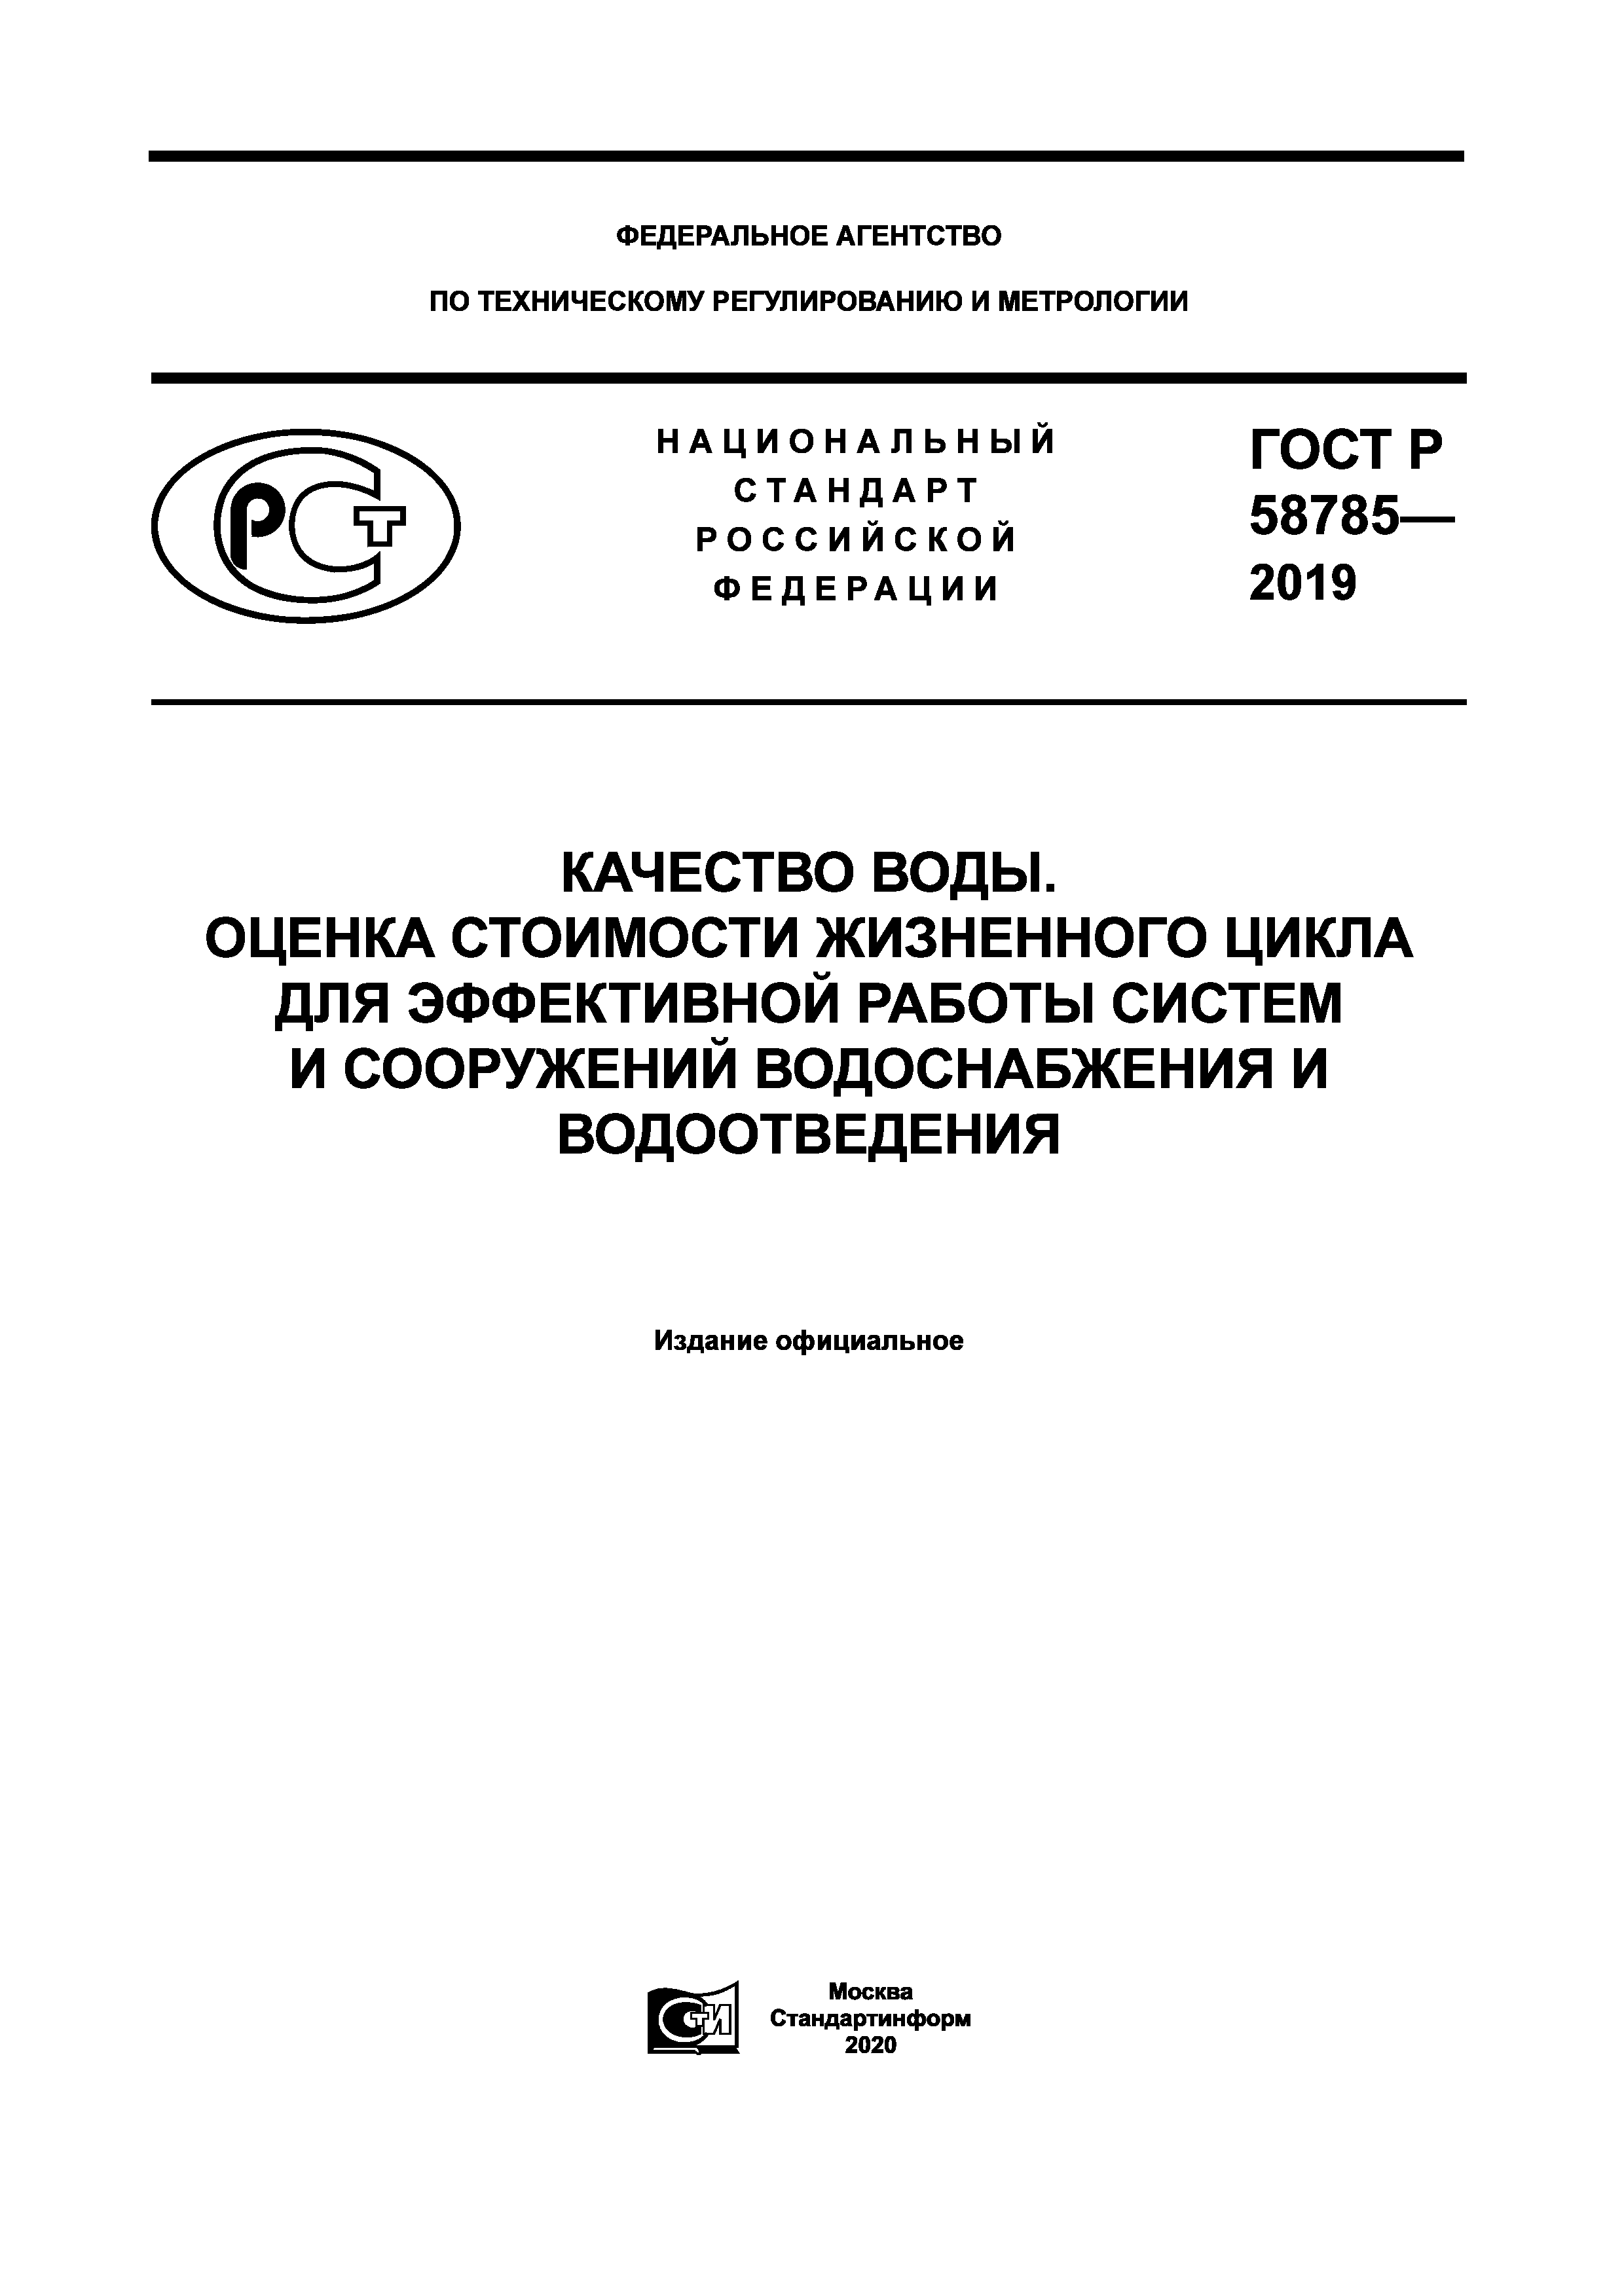 ГОСТ Р 58785-2019